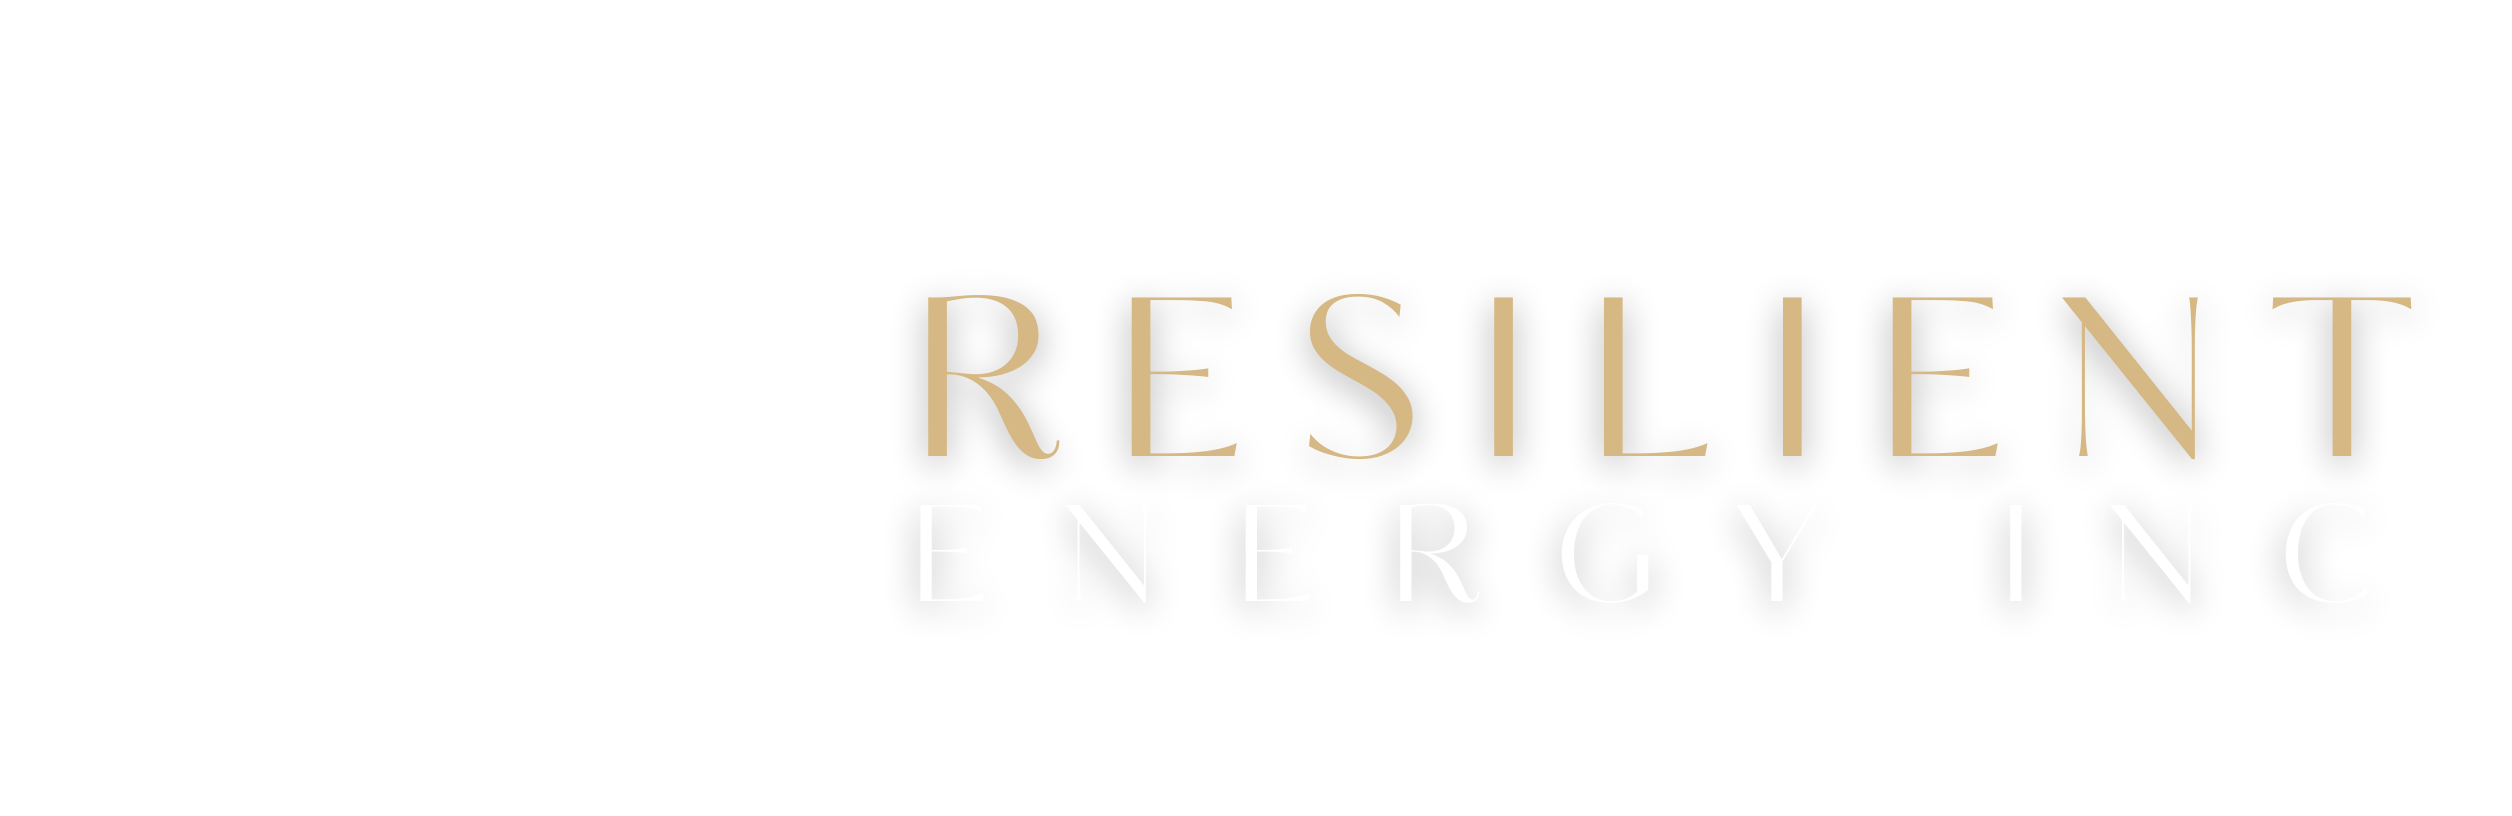 Resilient Energy Inc.